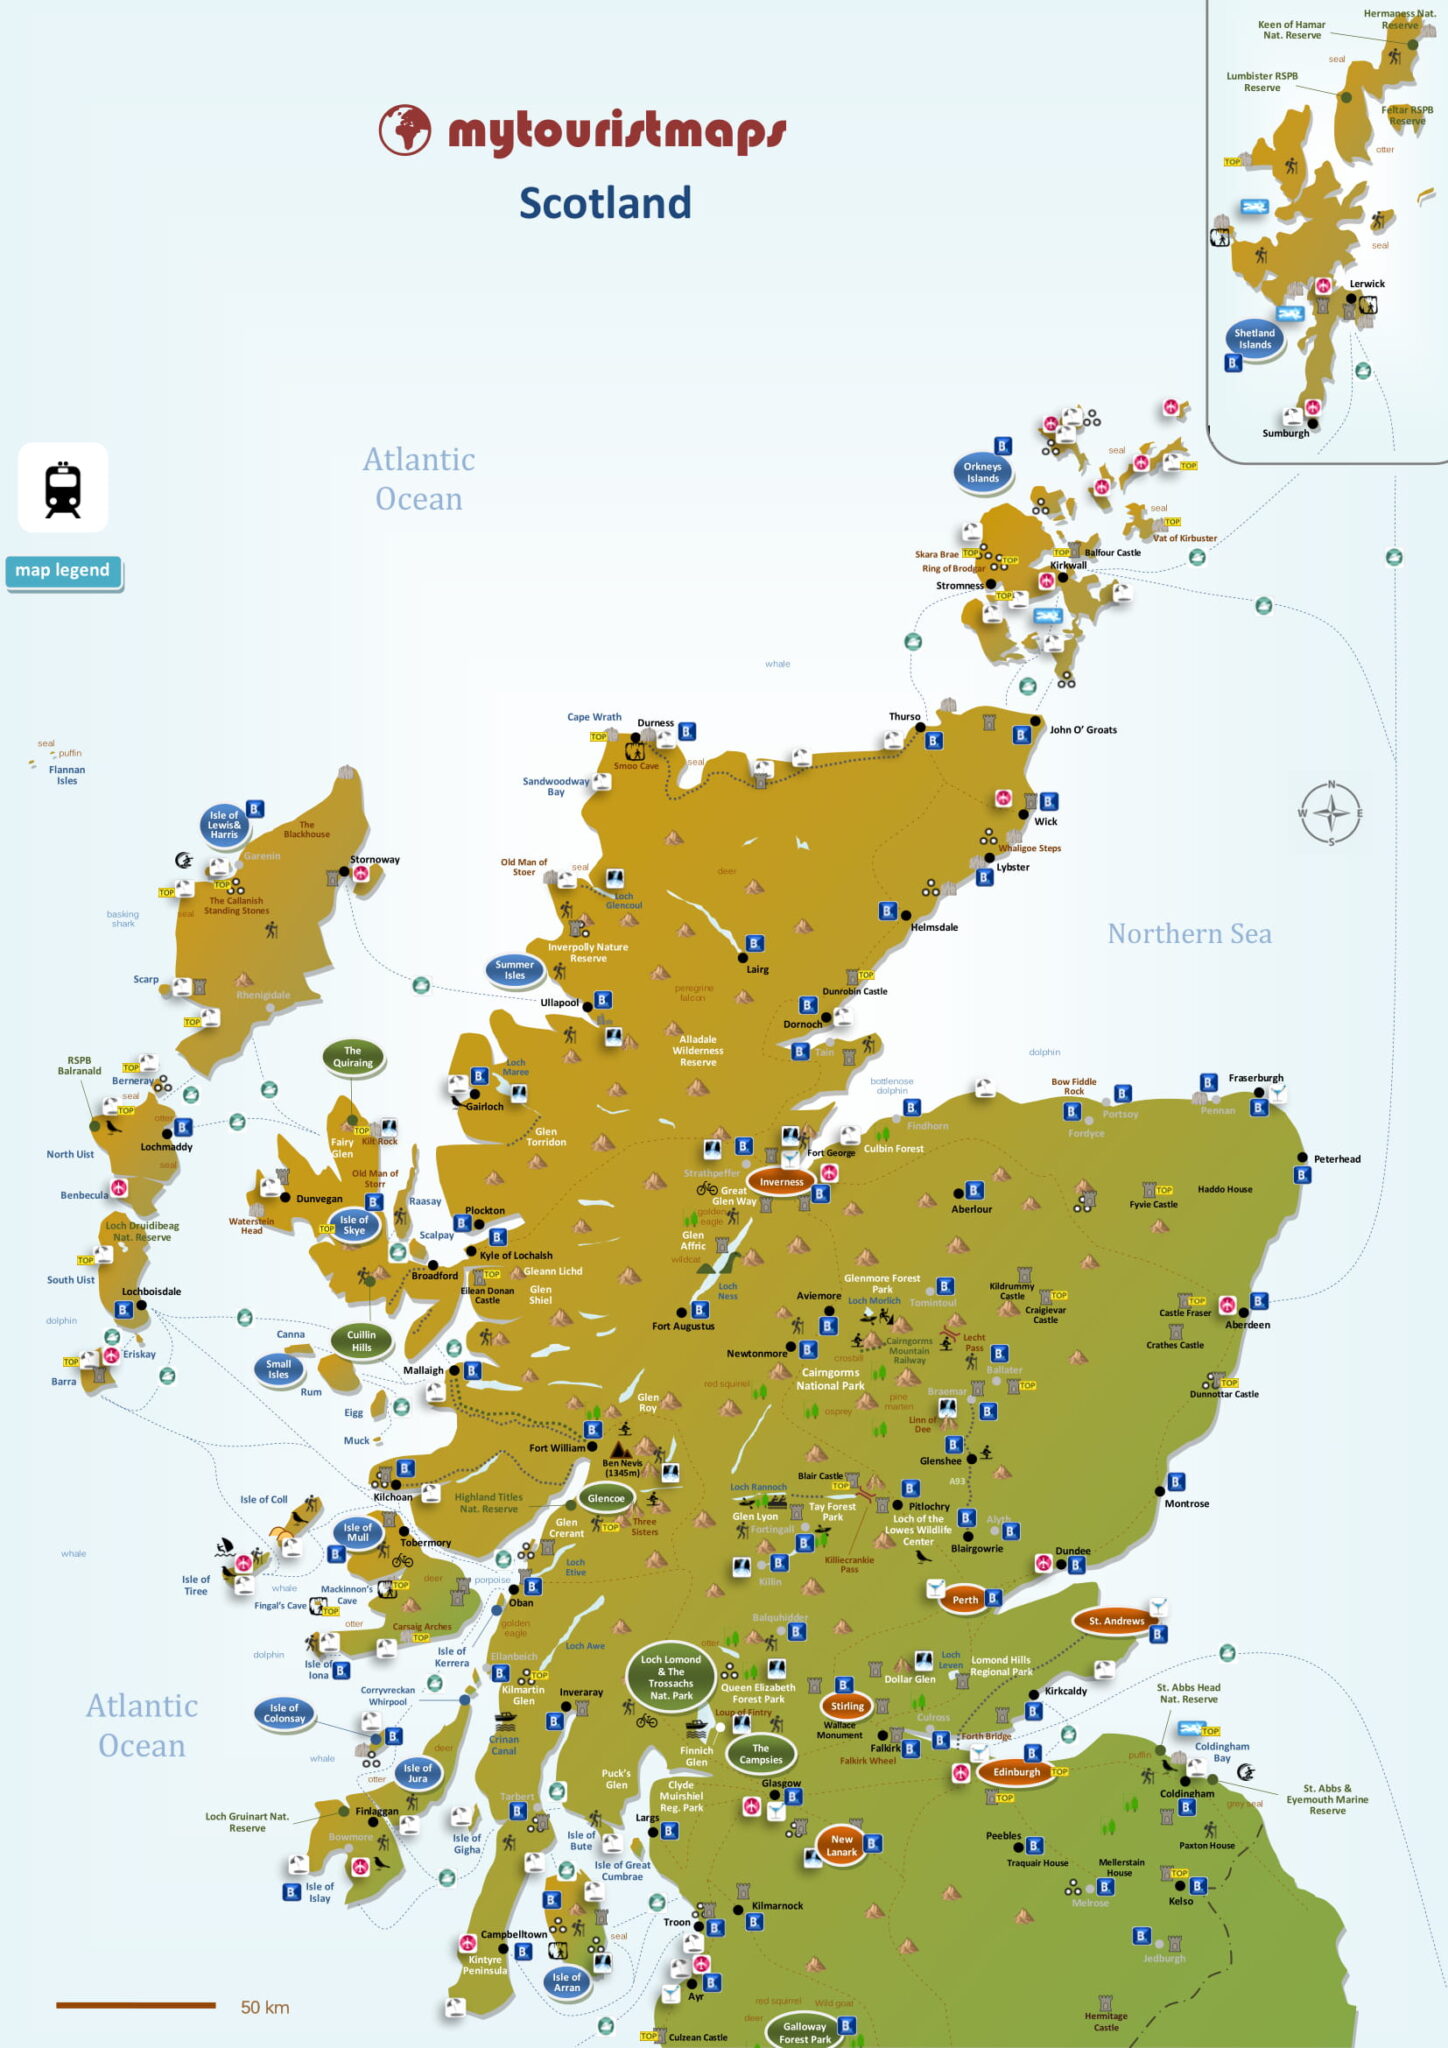 mytouristmaps.com - Interactive travel and tourist map of SCOTLAND